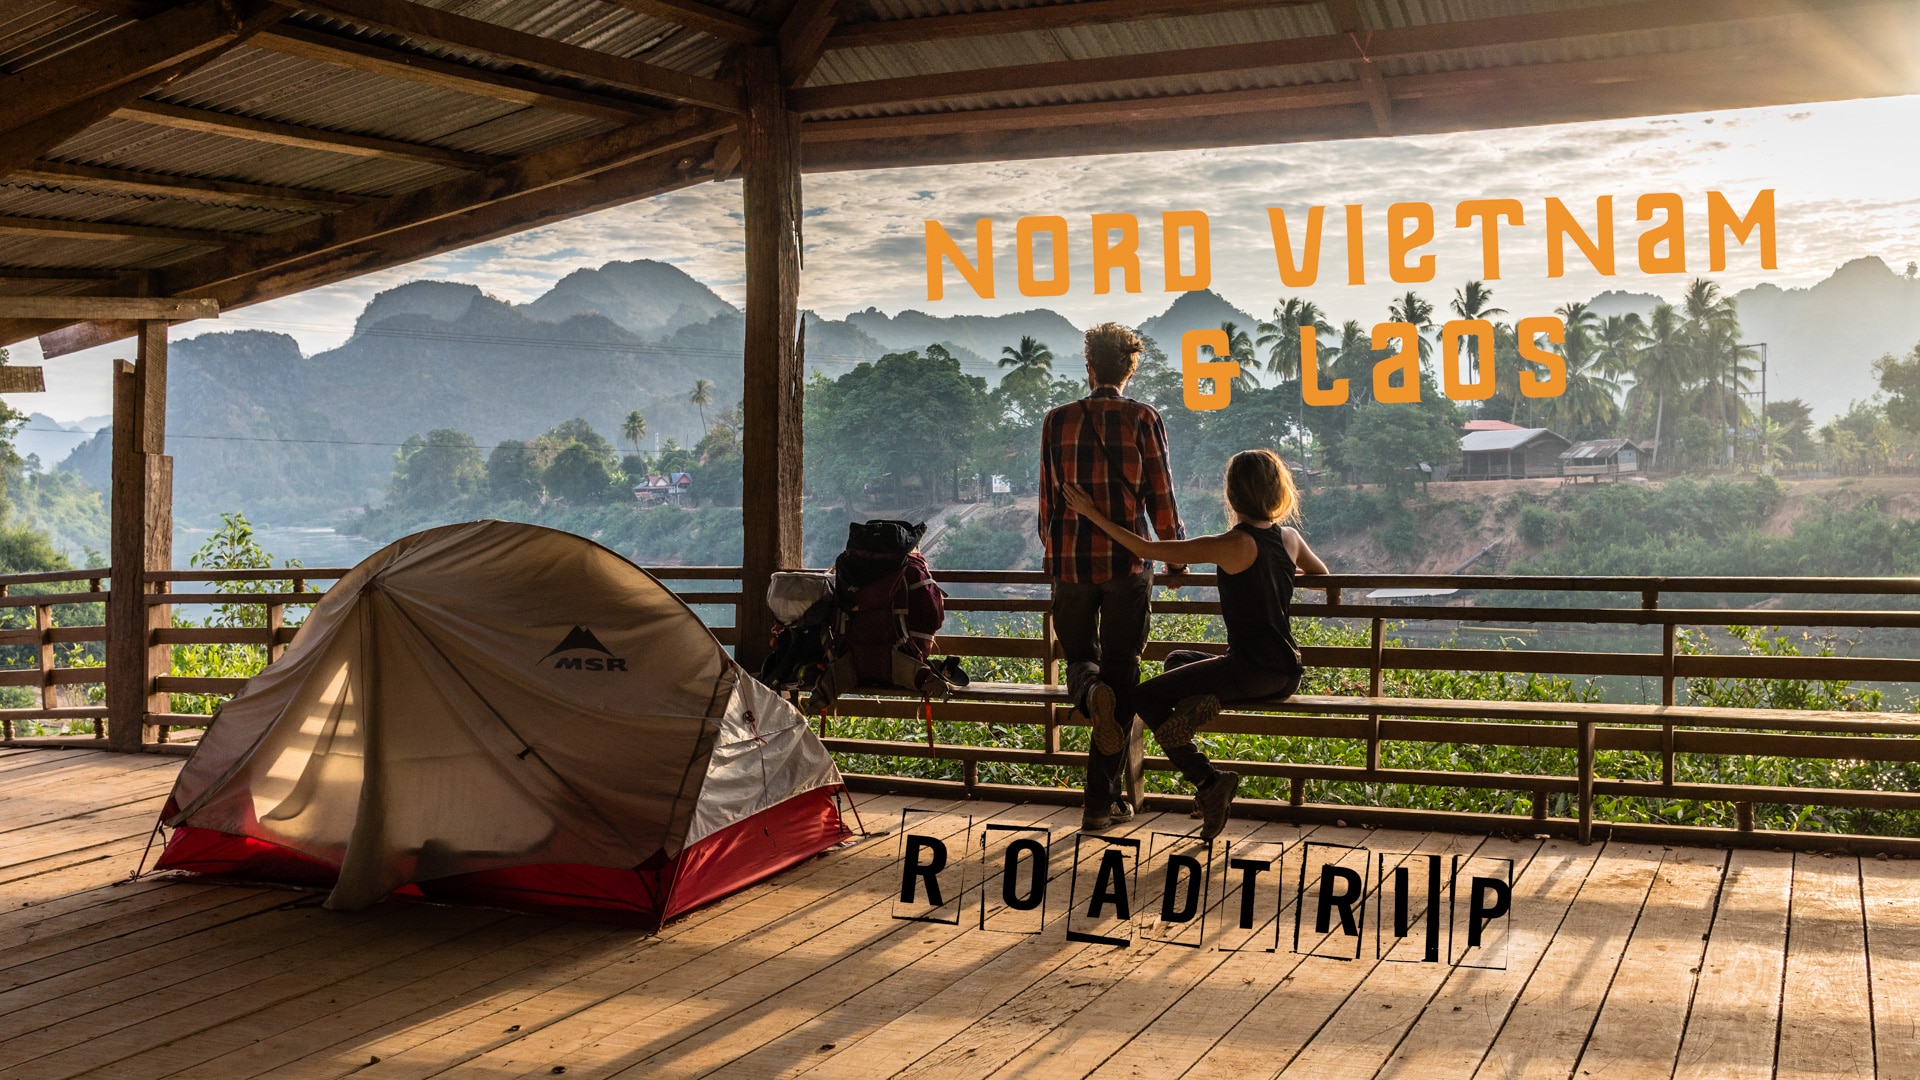 Hitchhiking Vietnam: Travel Tips